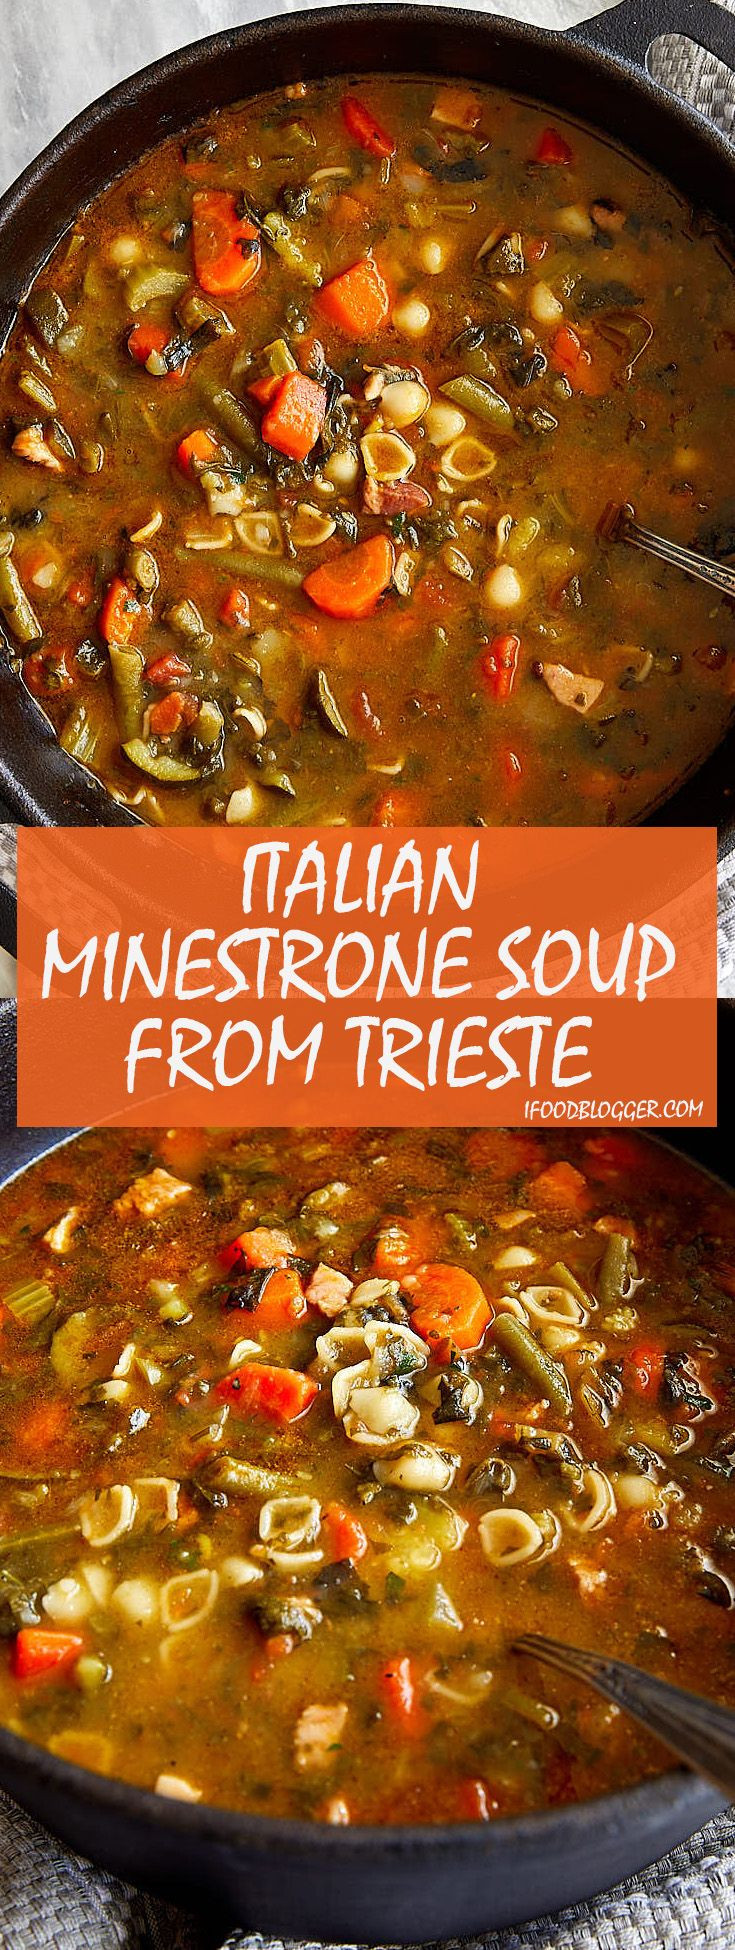 Authentic Italian Minestrone Soup Recipes
 Authentic Italian Minestrone Soup from Trieste